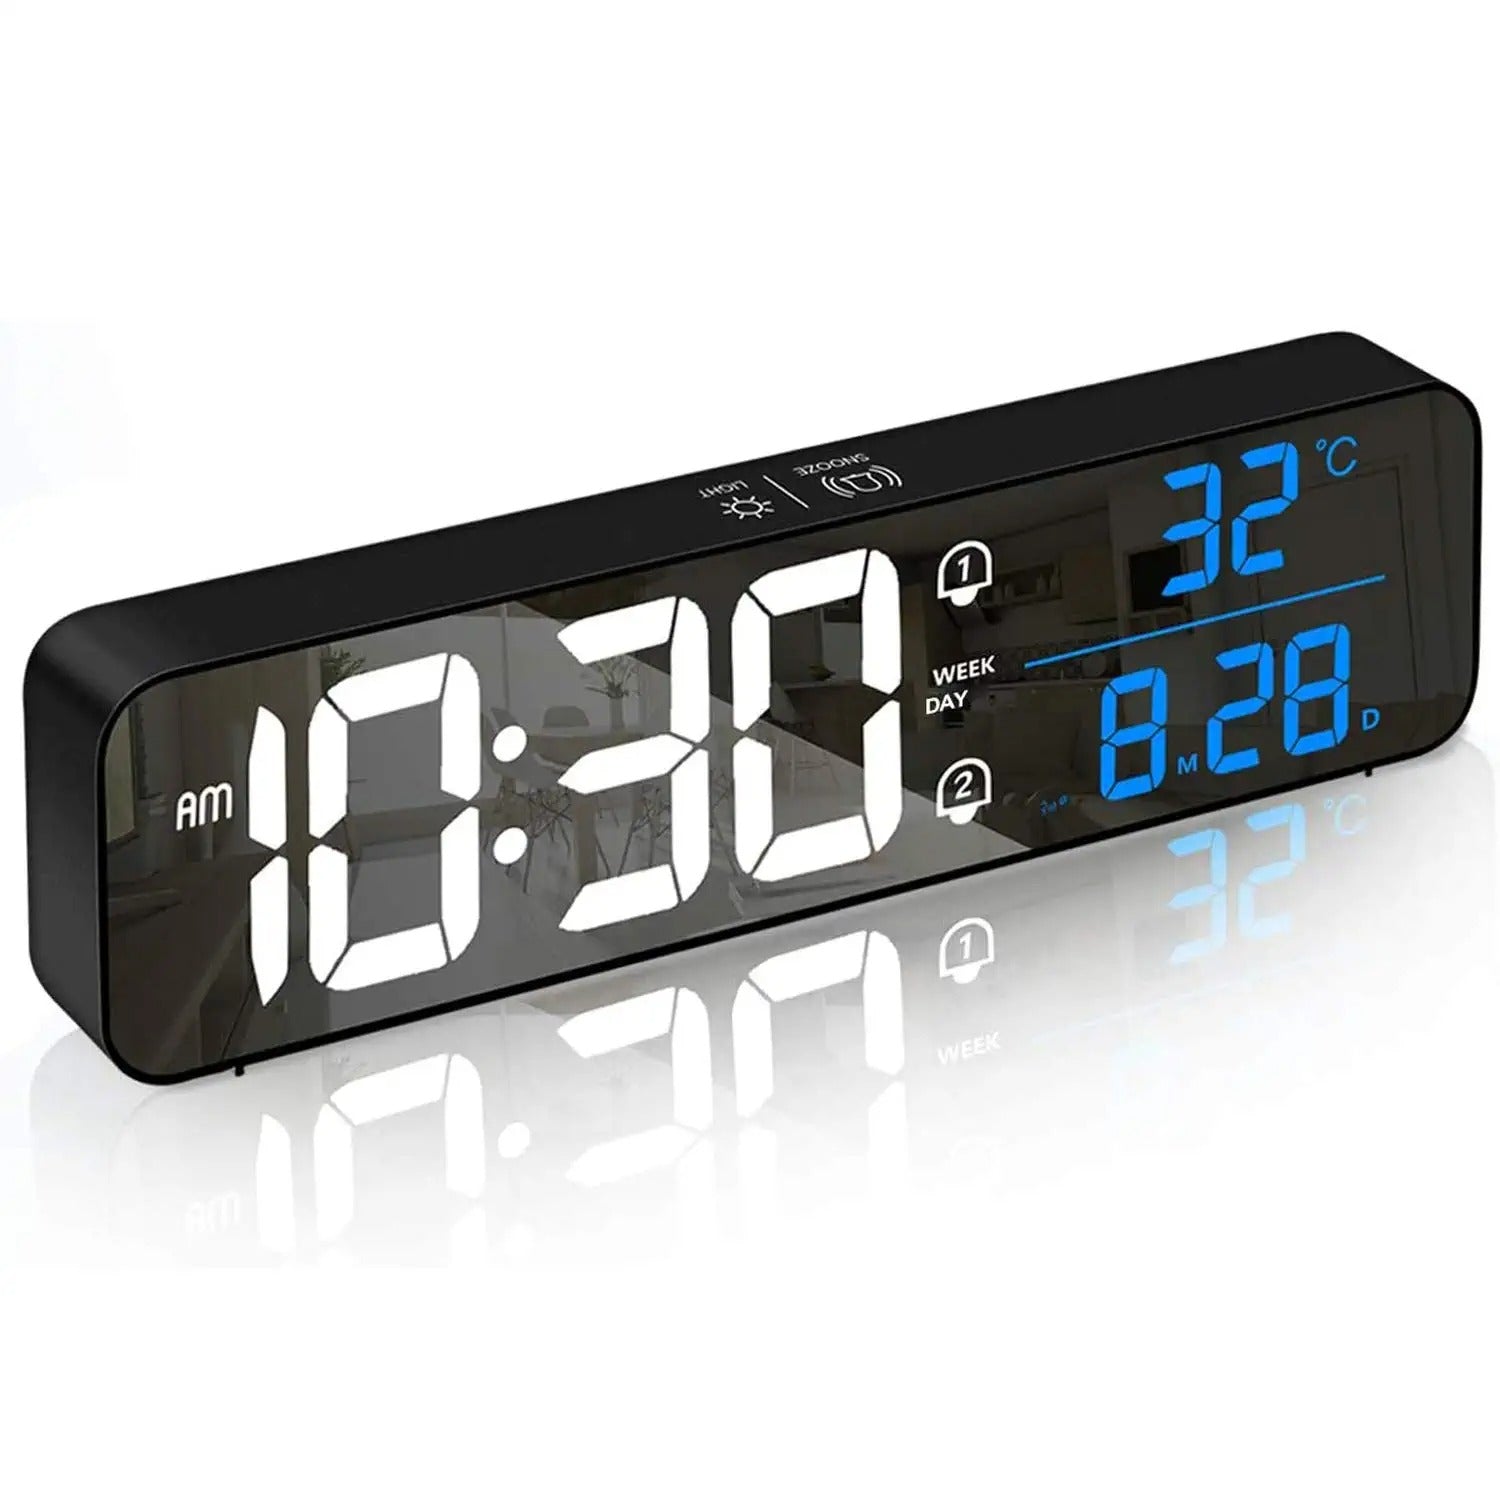 Digital Clock Large Display Music LED Digital Alarm Clock Temperature Date Display Automatic Brightness Dimmer Smart Cool Modern Mirror Clocks Black | Decor Gifts and More